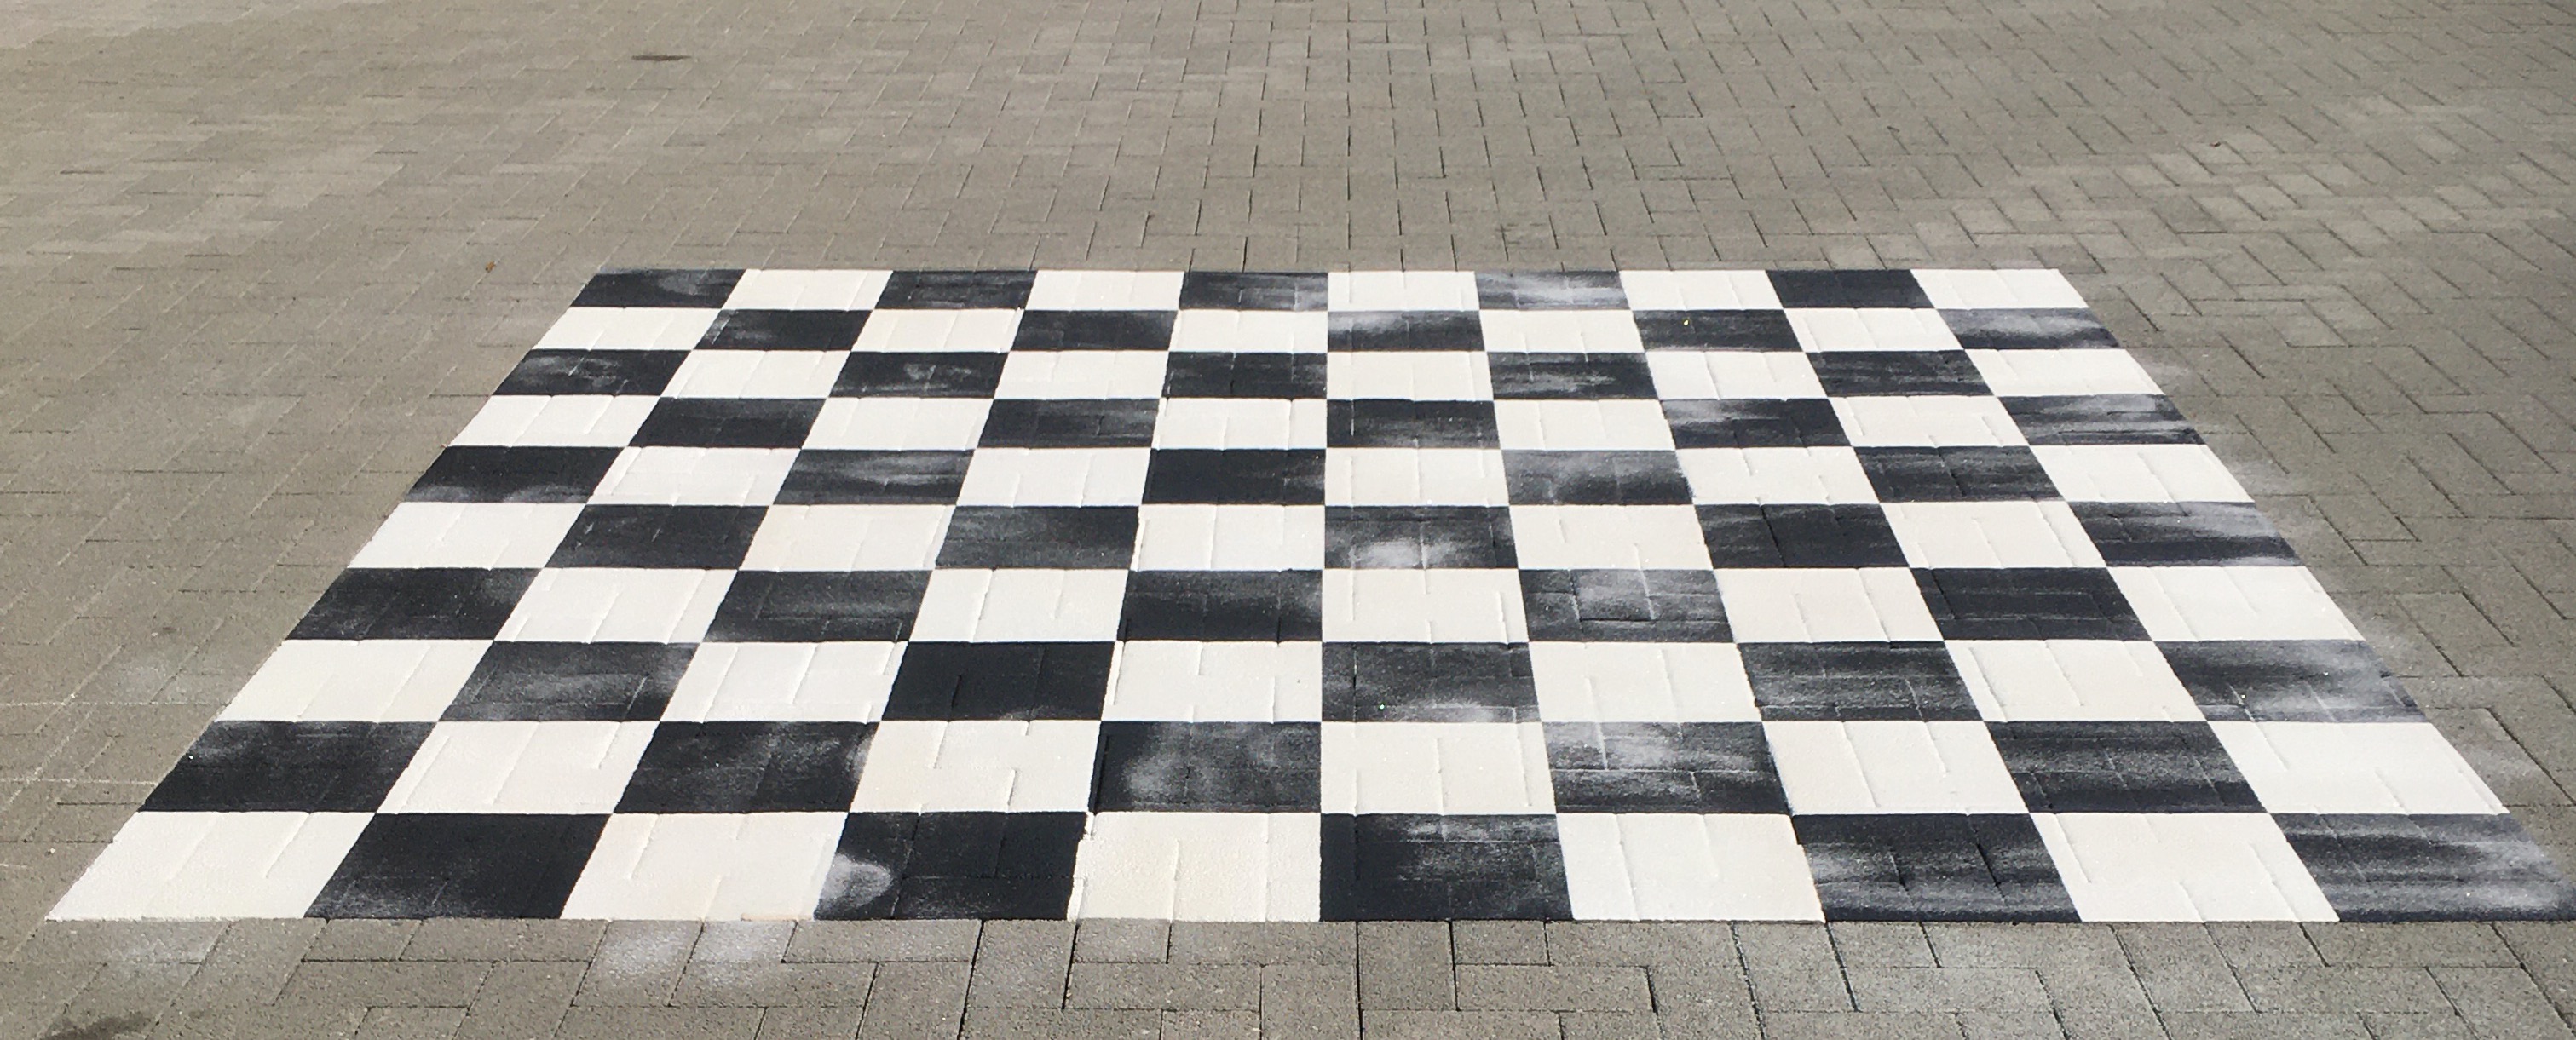 honderdveld-tableau-de-cent-schaakbord-dambord-bewegend-leren-apprendre-par-le-mouvement-eduplay-echecs-jeu-de-dames-eduplay